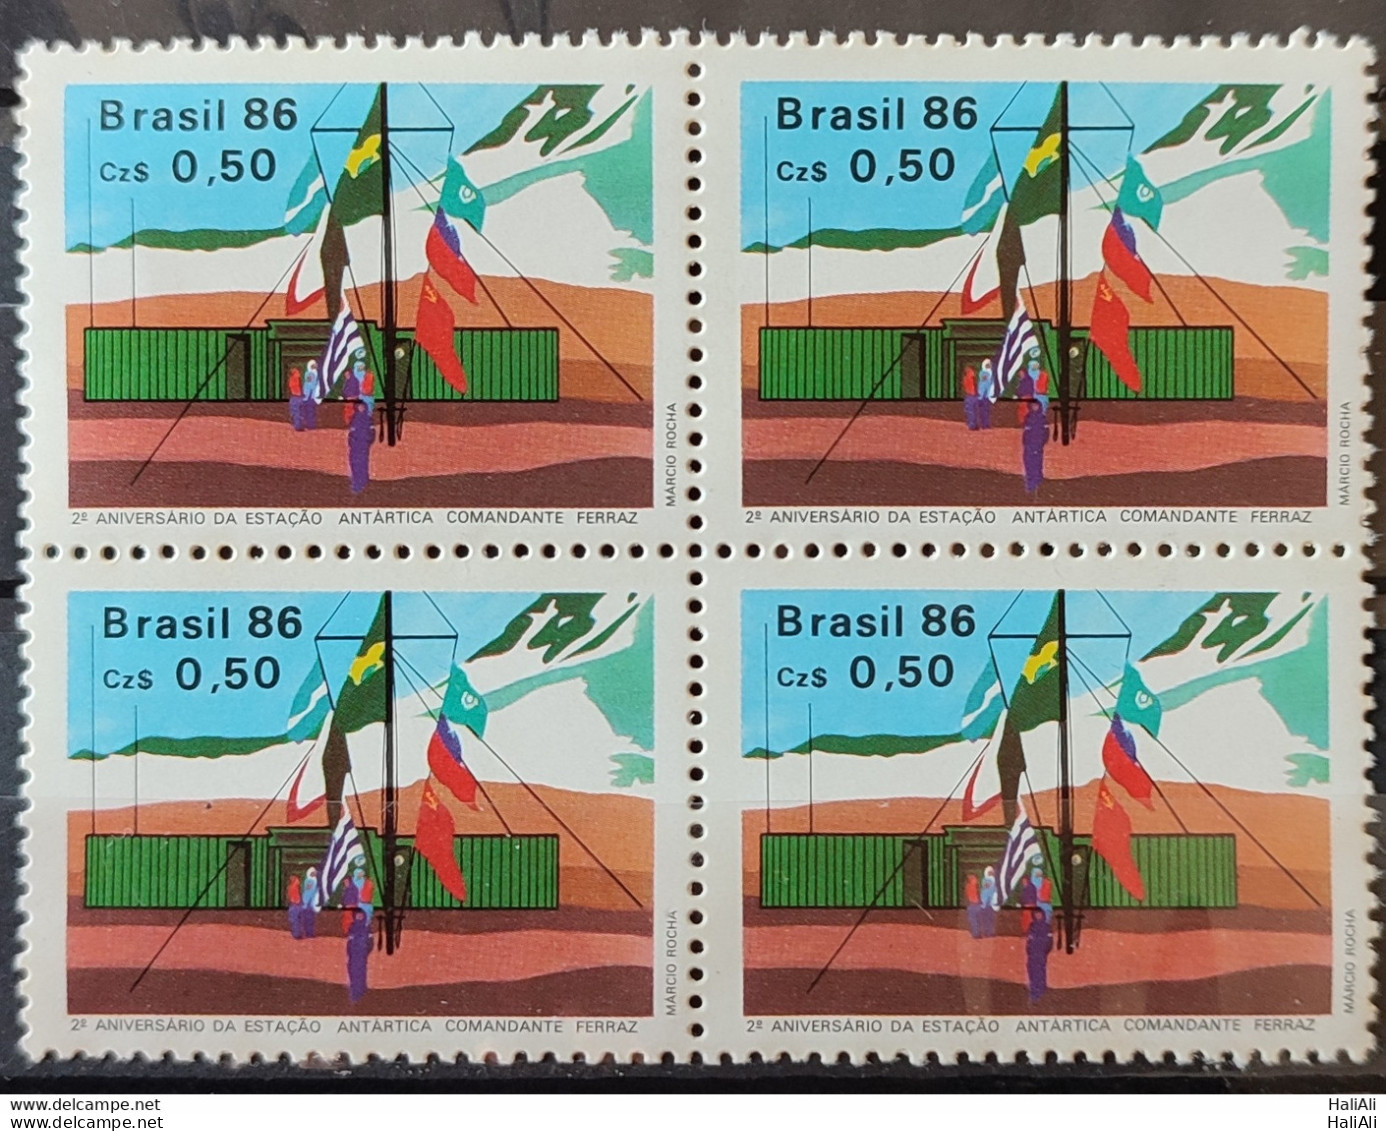 C 1508 Brazil Stamp Antarctic Station Commander Ferraz Flag 1986 Block Of 4 2.jpg - Nuevos